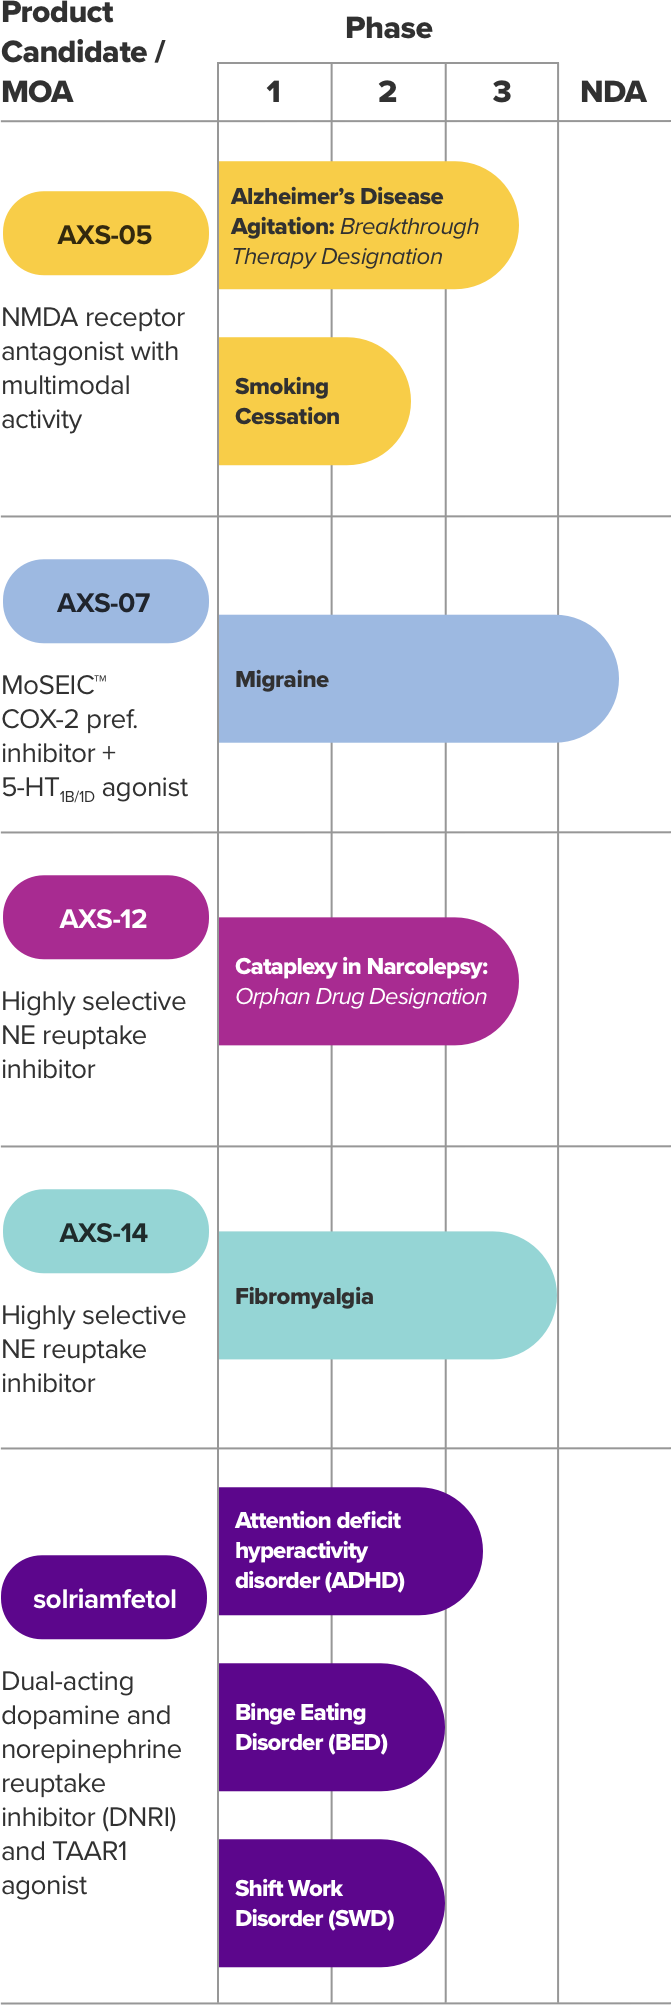 chart showing the progress of five Axsome product candidates: axs-05, axs-07, axs-12, axs-14, and solriamfetol